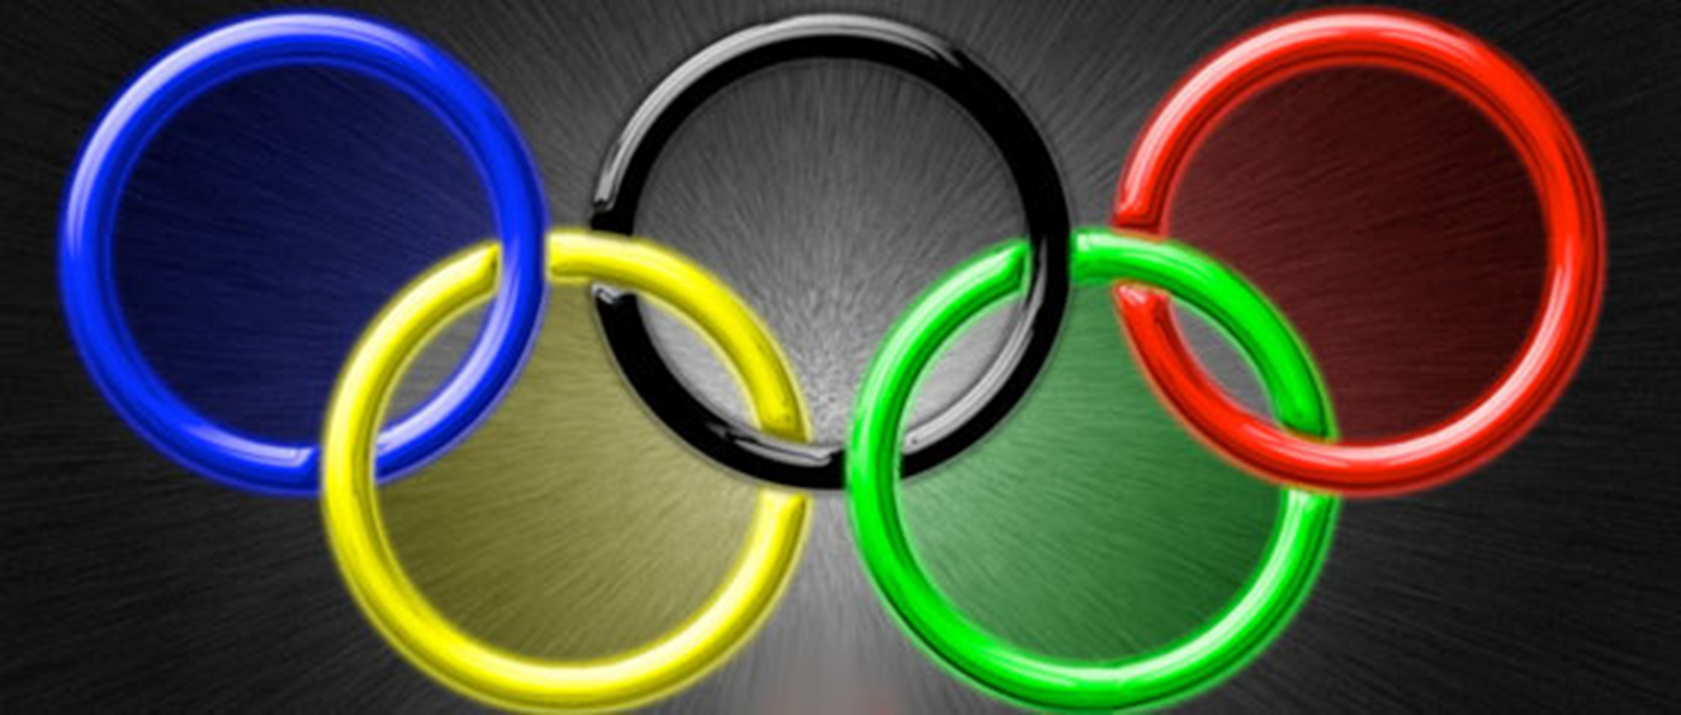 Olympic Rings Clip Art N22 free image download